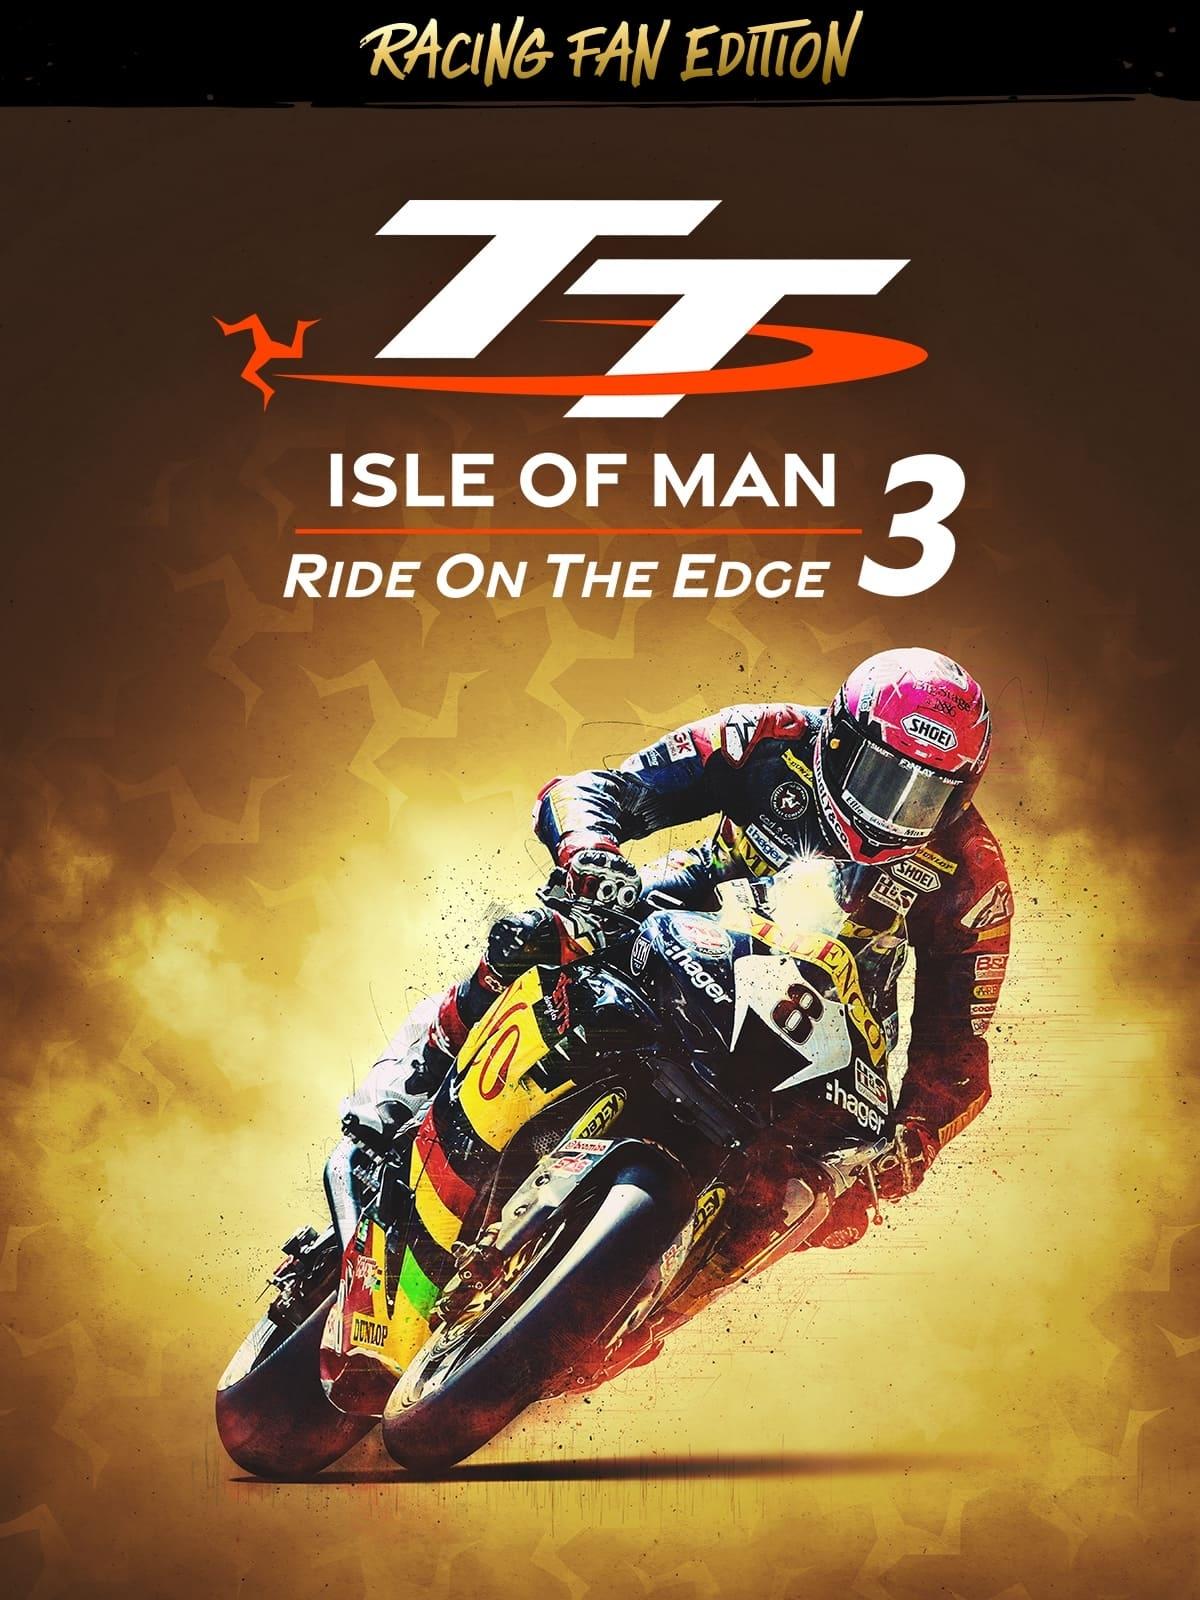 TT Isle of Man: Ride on the Edge 3 Racing Fan Edition | Middle East (de5734cd-2581-49d9-a31d-908fce6c8d29)